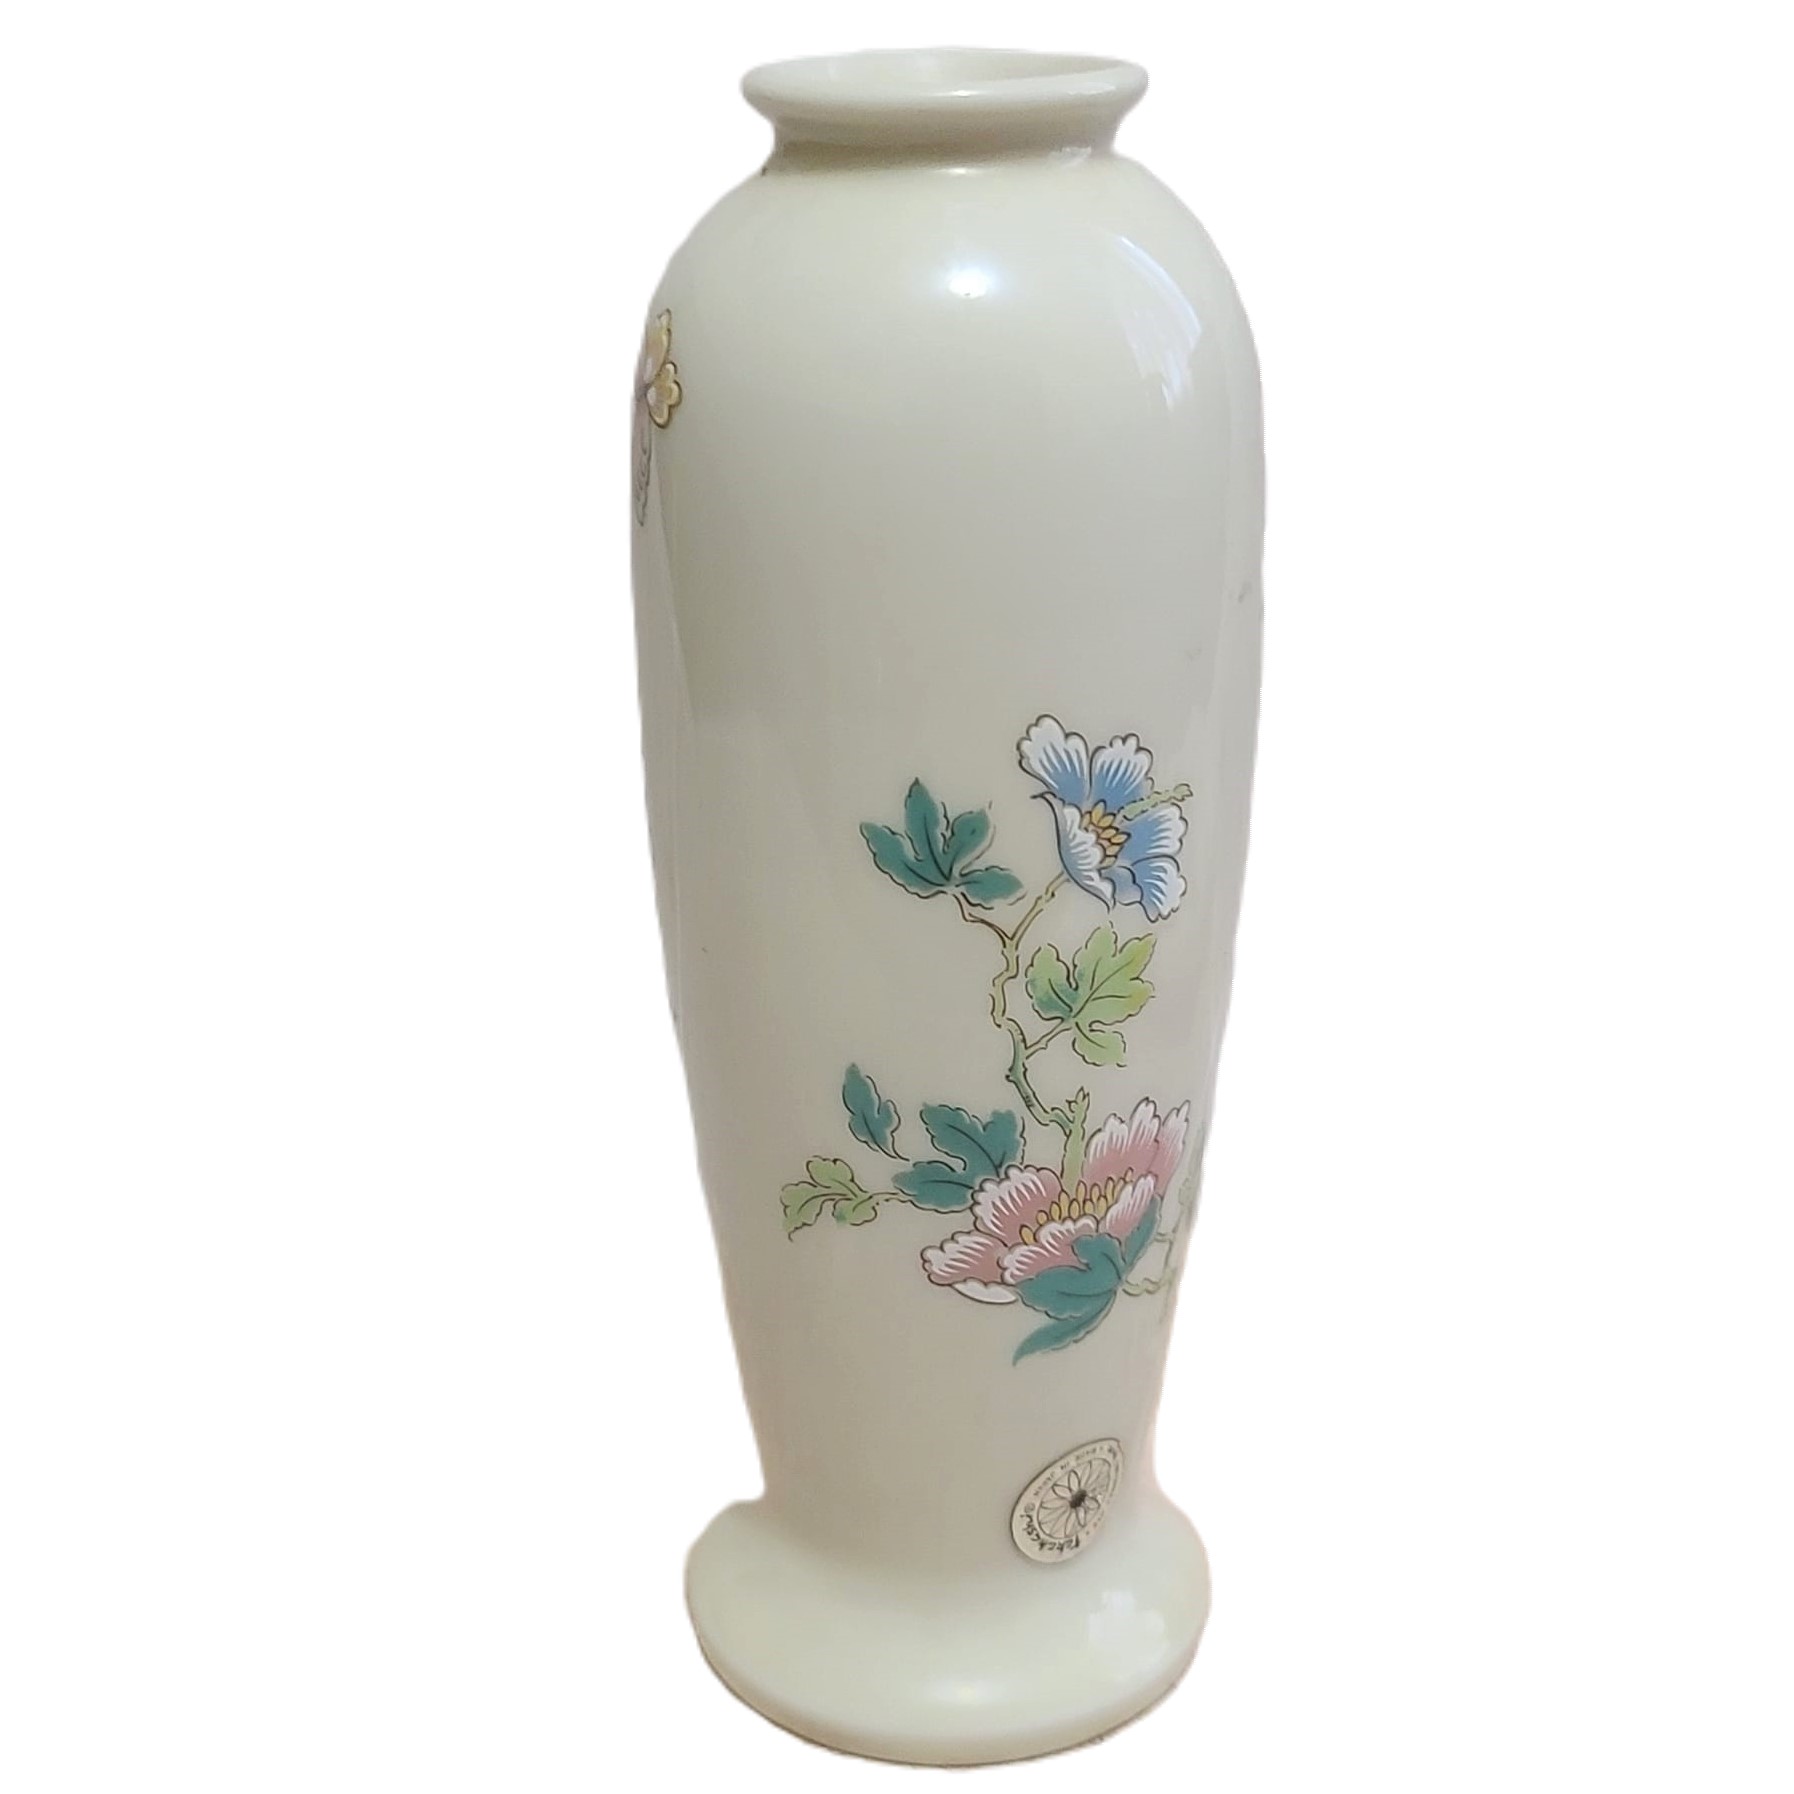 Cho Cho Sanfransico floral bud vase